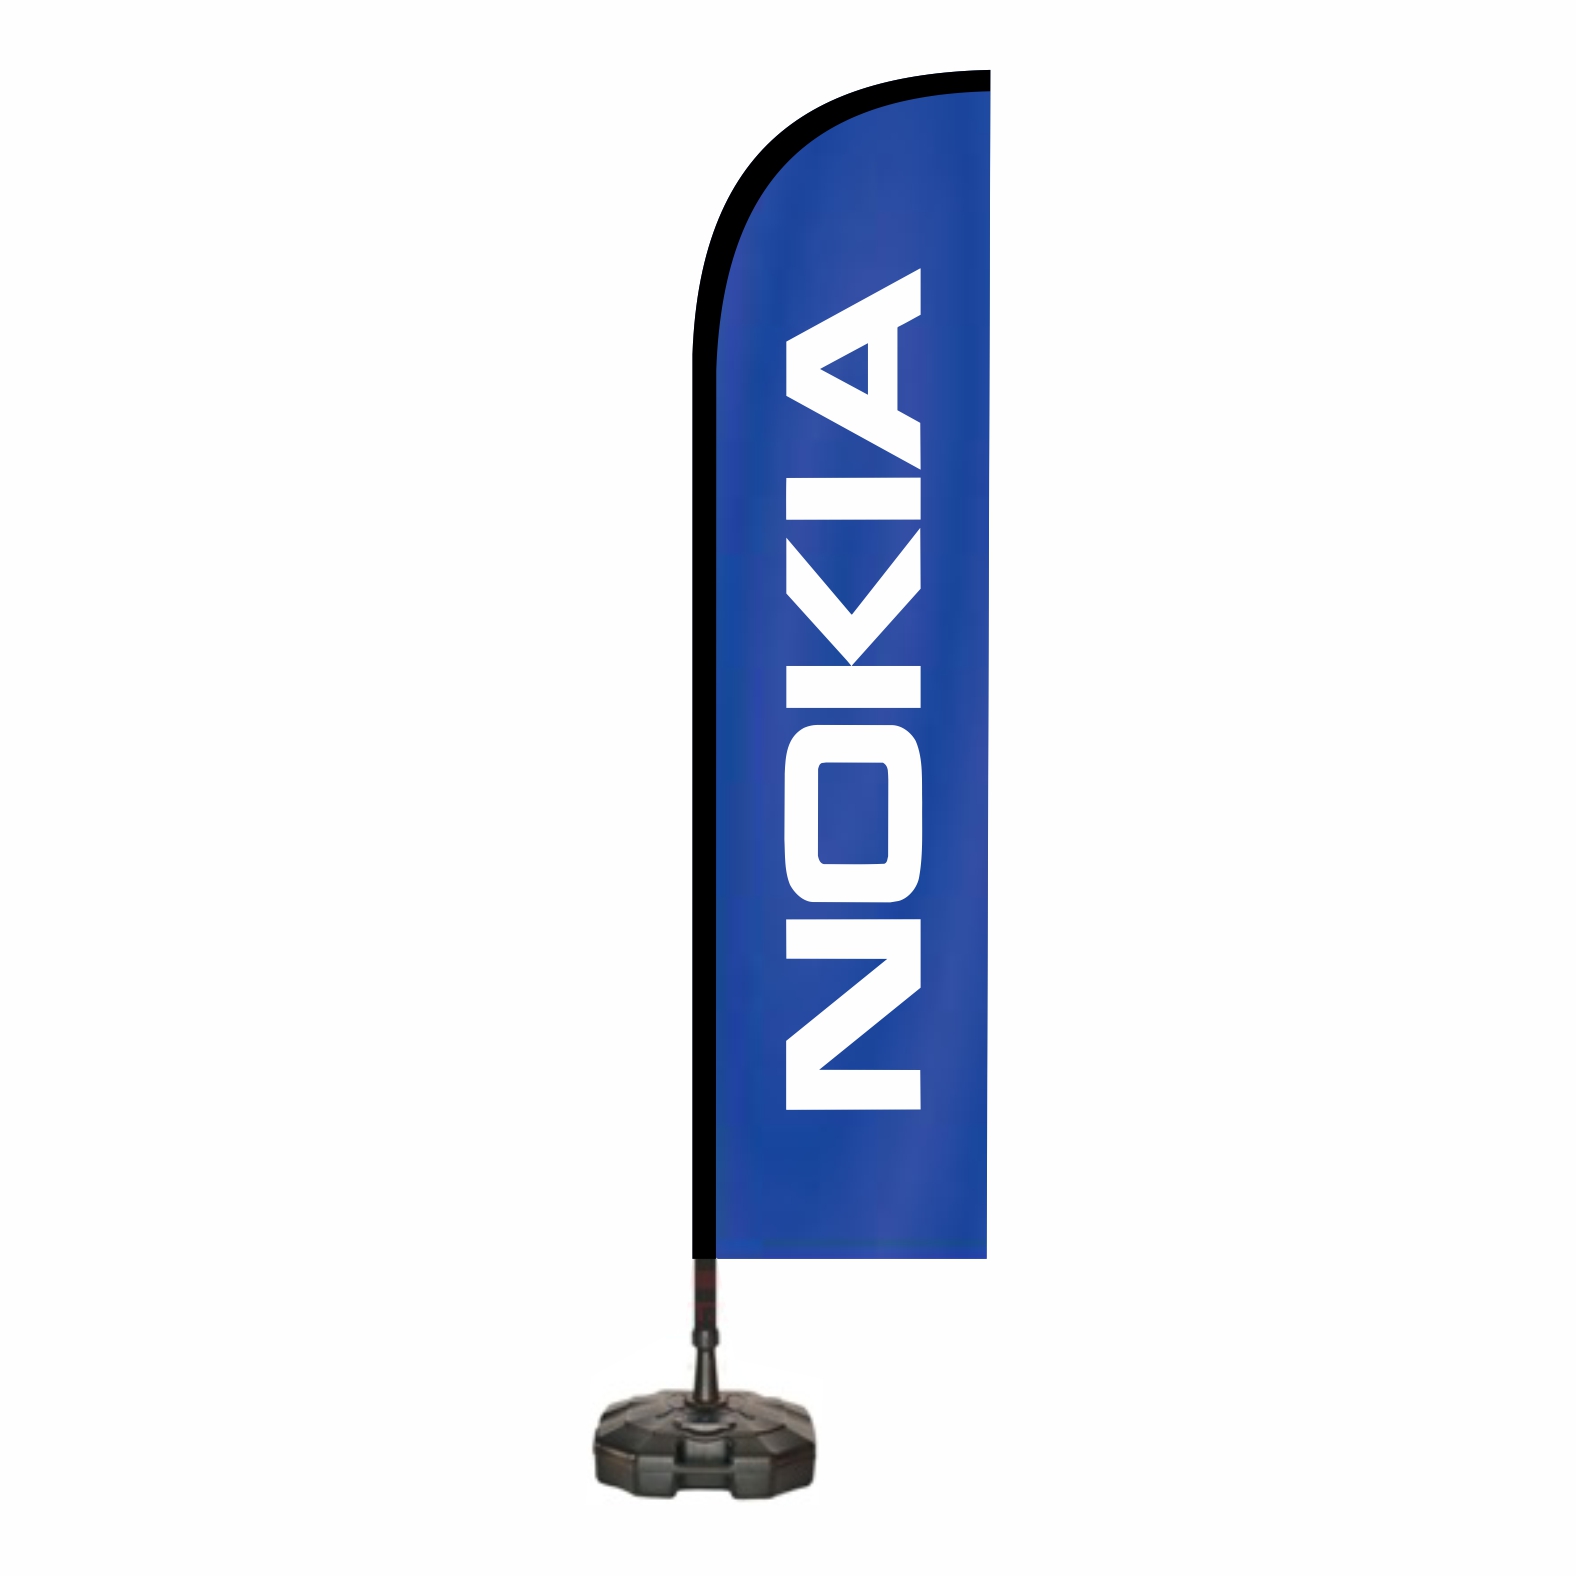 Nokia Yelken Bayraklar nerede satlr